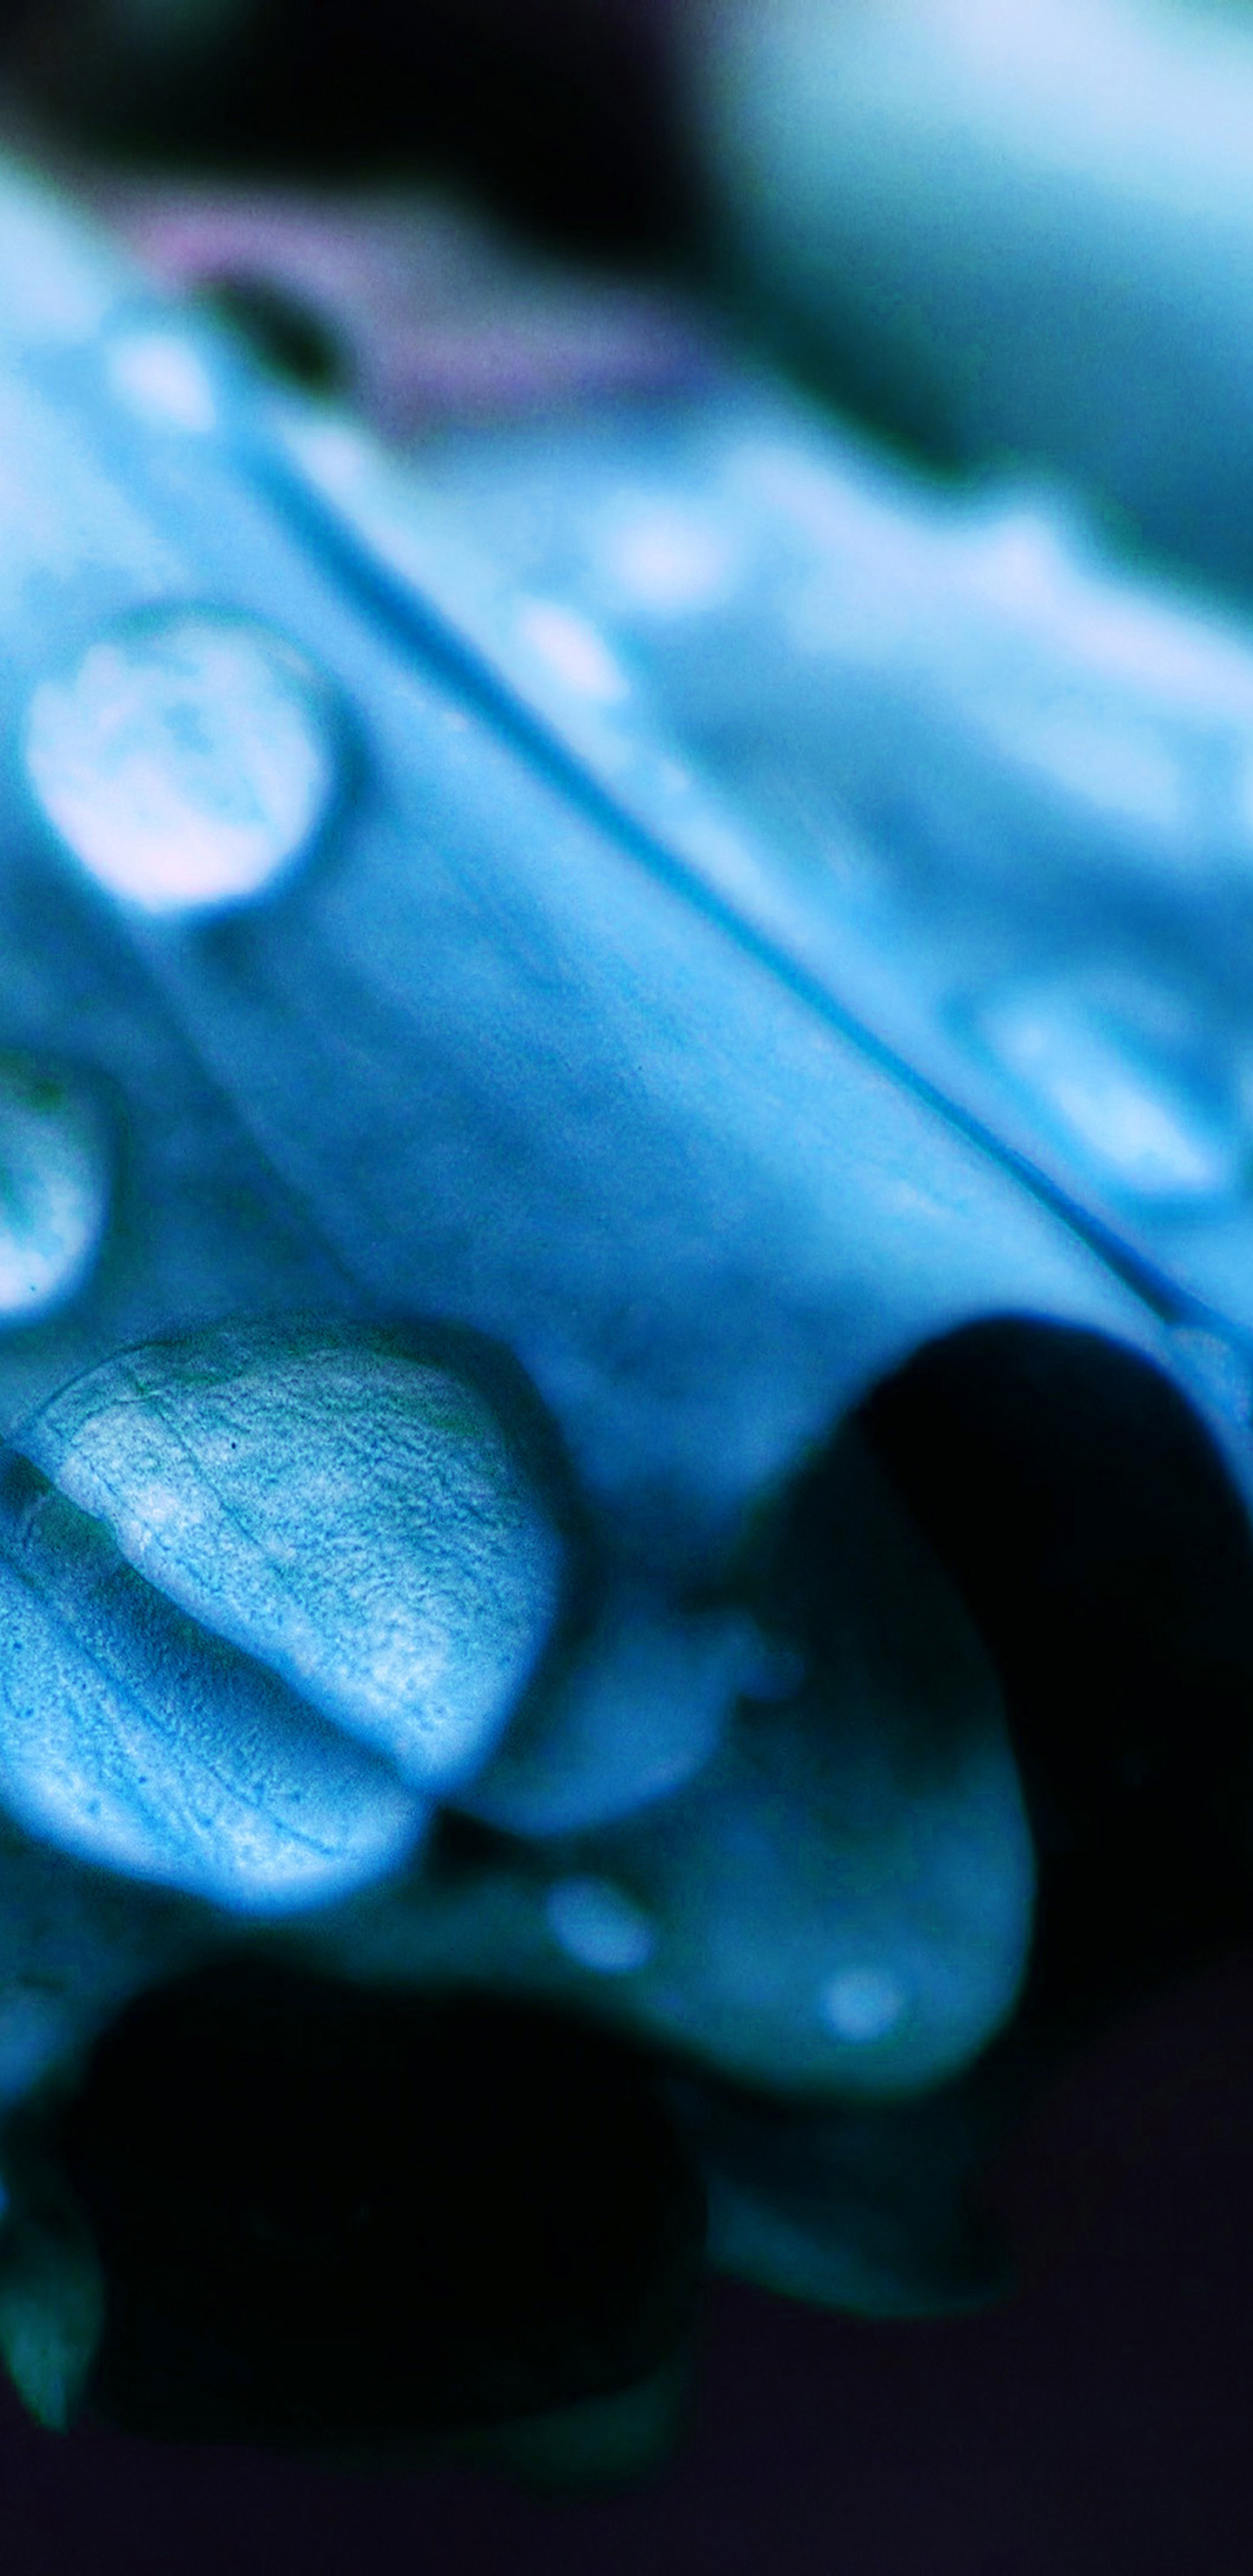 1440x2960 Blue flower background blurred Galaxy Note 8 Wallpaper